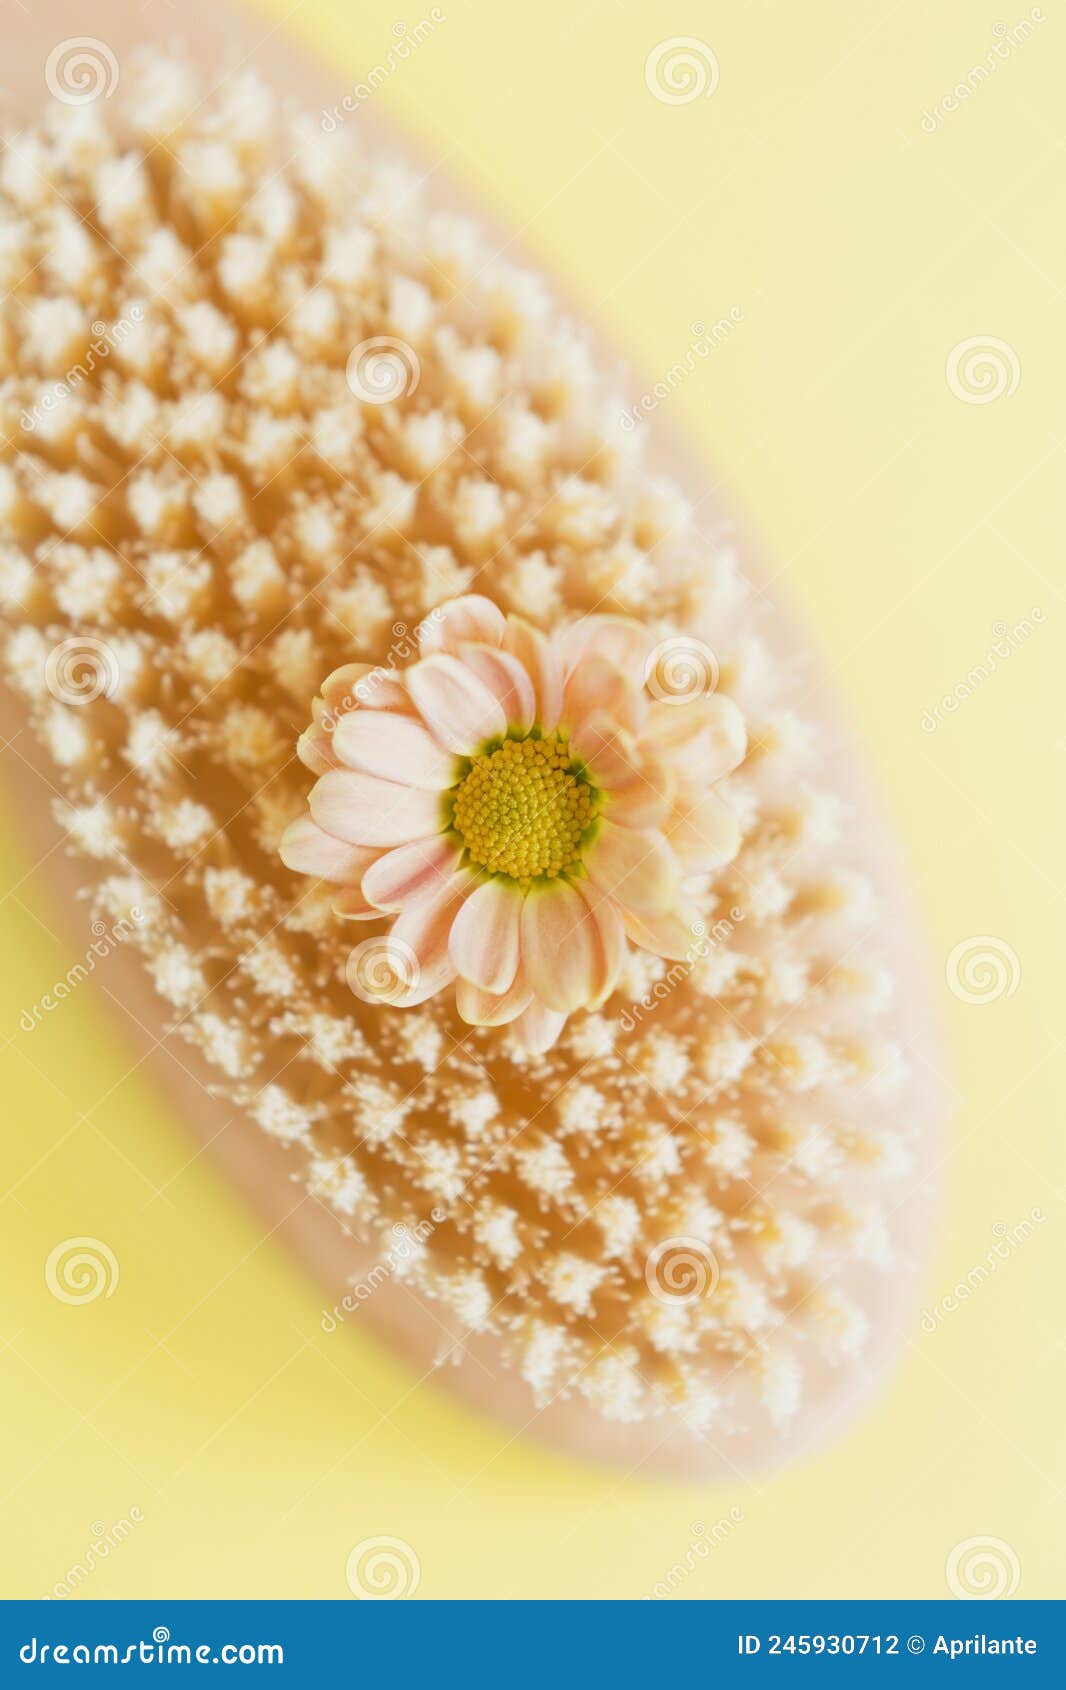 hair brush, anti-cellulite brush with flower